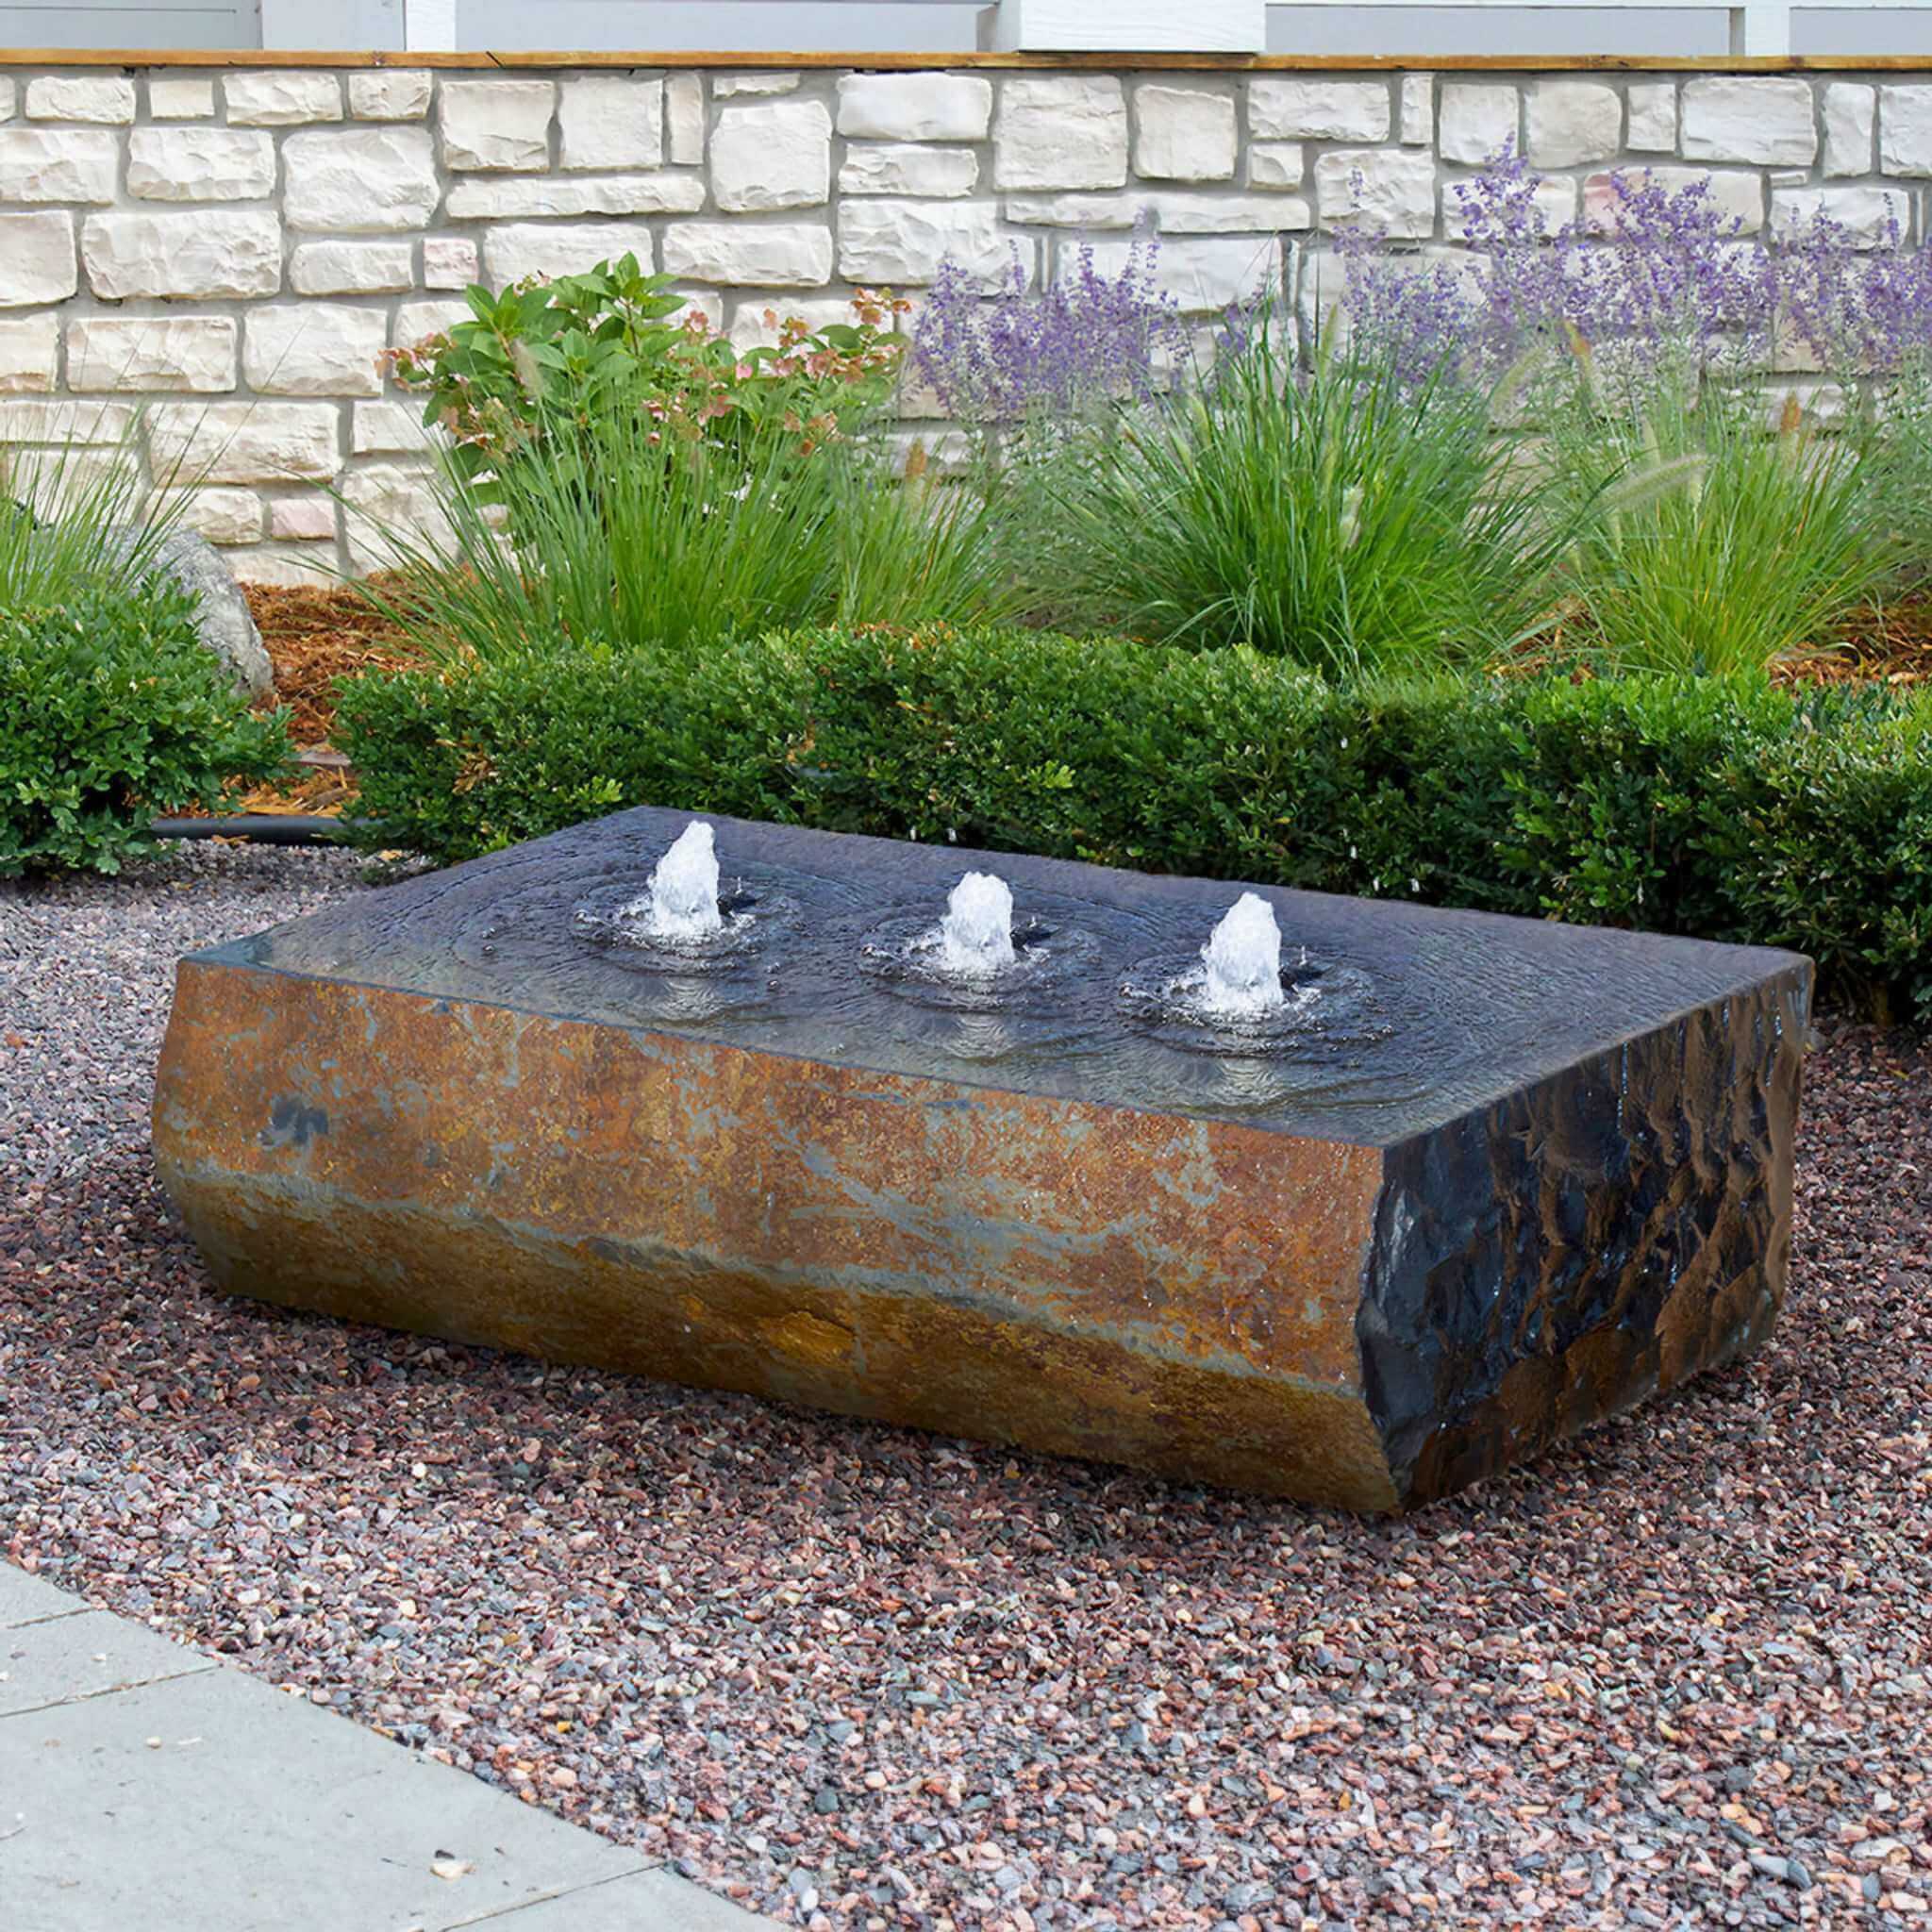 Basalt Block "Ichise" Triple Drilled Fountain - Complete Kit - Blue Thumb